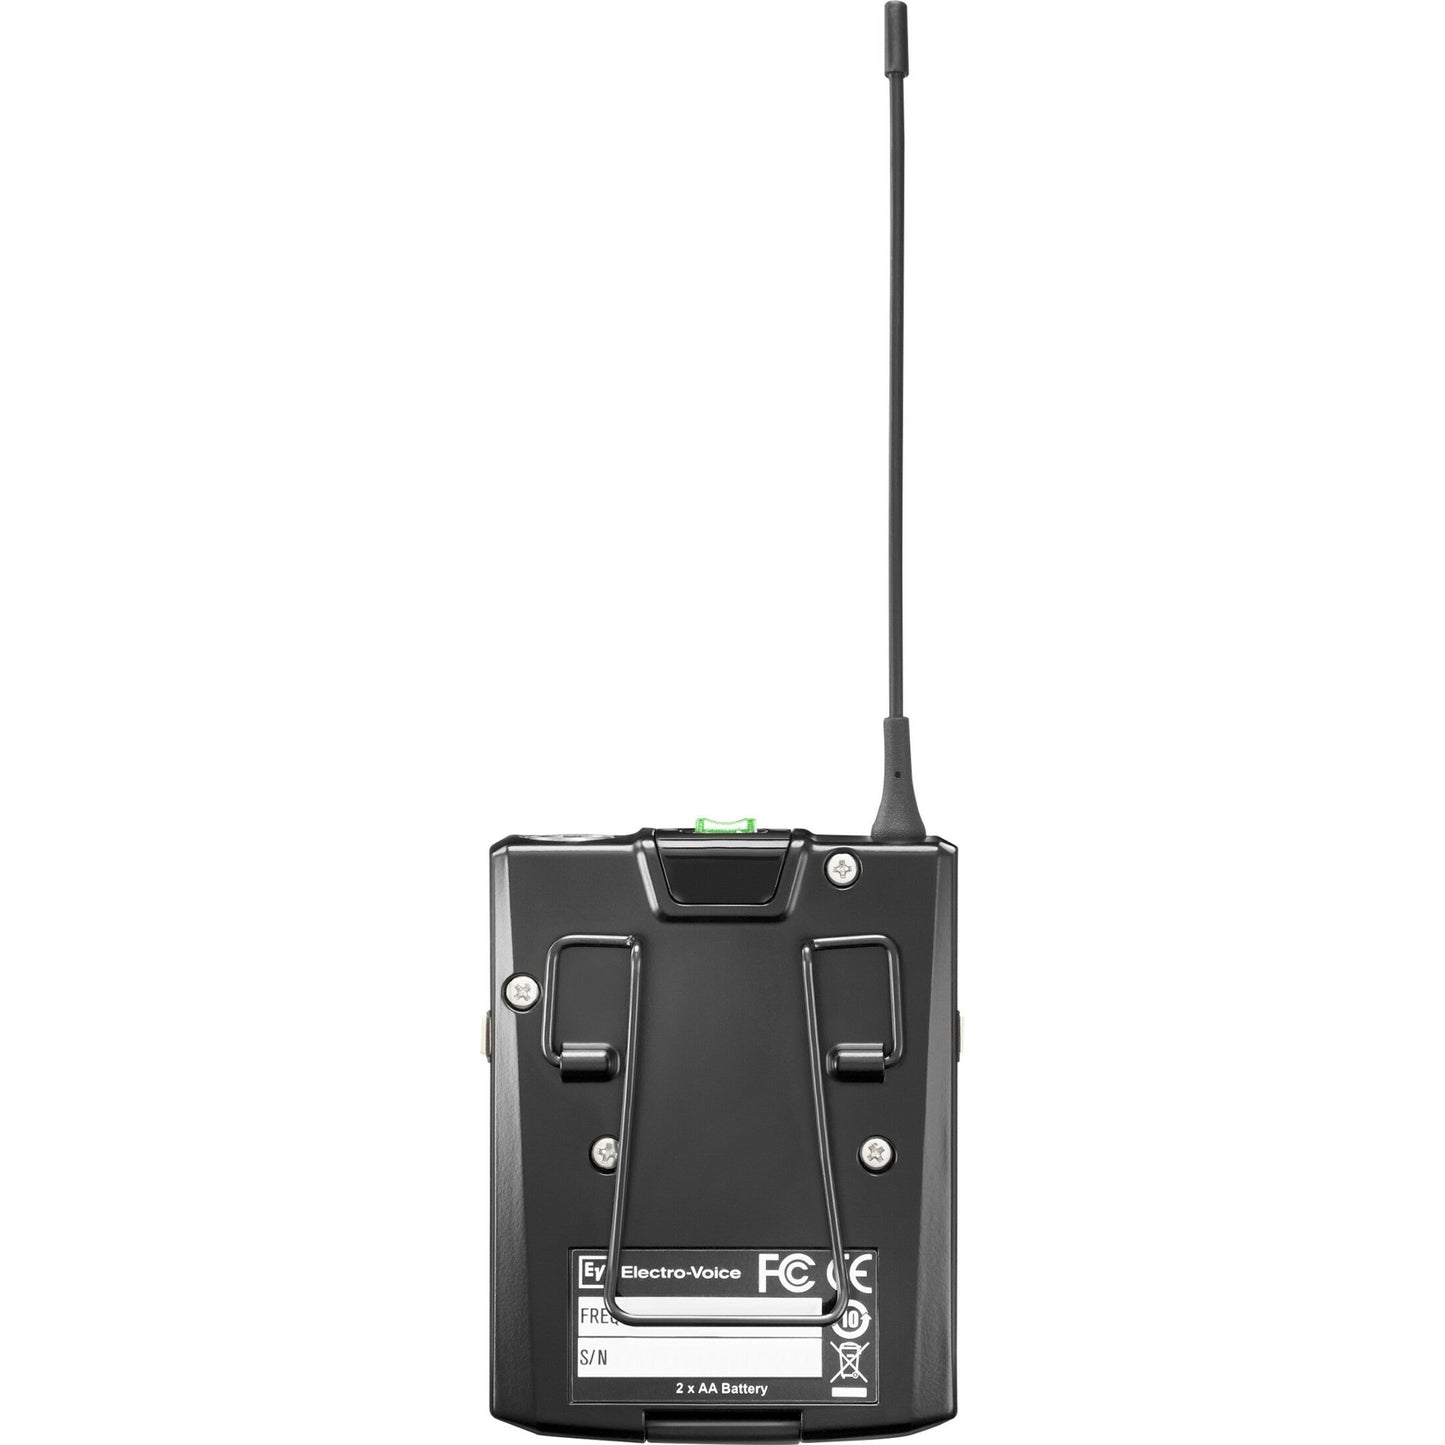 Electro-Voice RE3-BPT Bodypack Transmitter